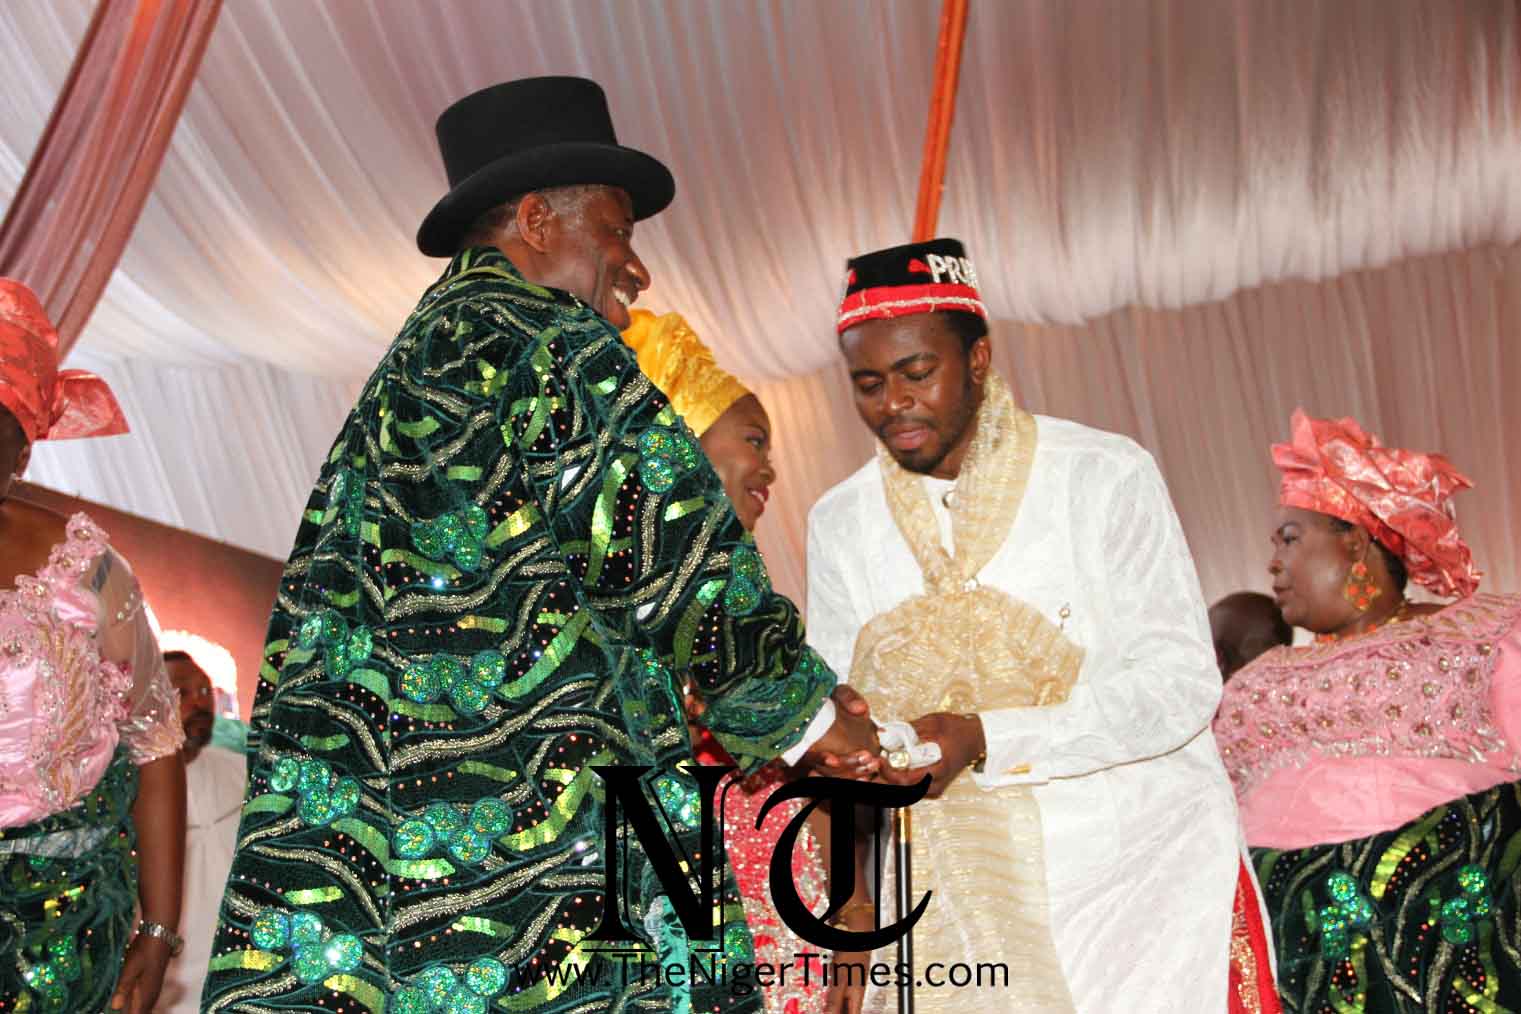 The-niger-times-godswill-faith-wedding-Traditional-Bayelsa-goddluck-72.jpg